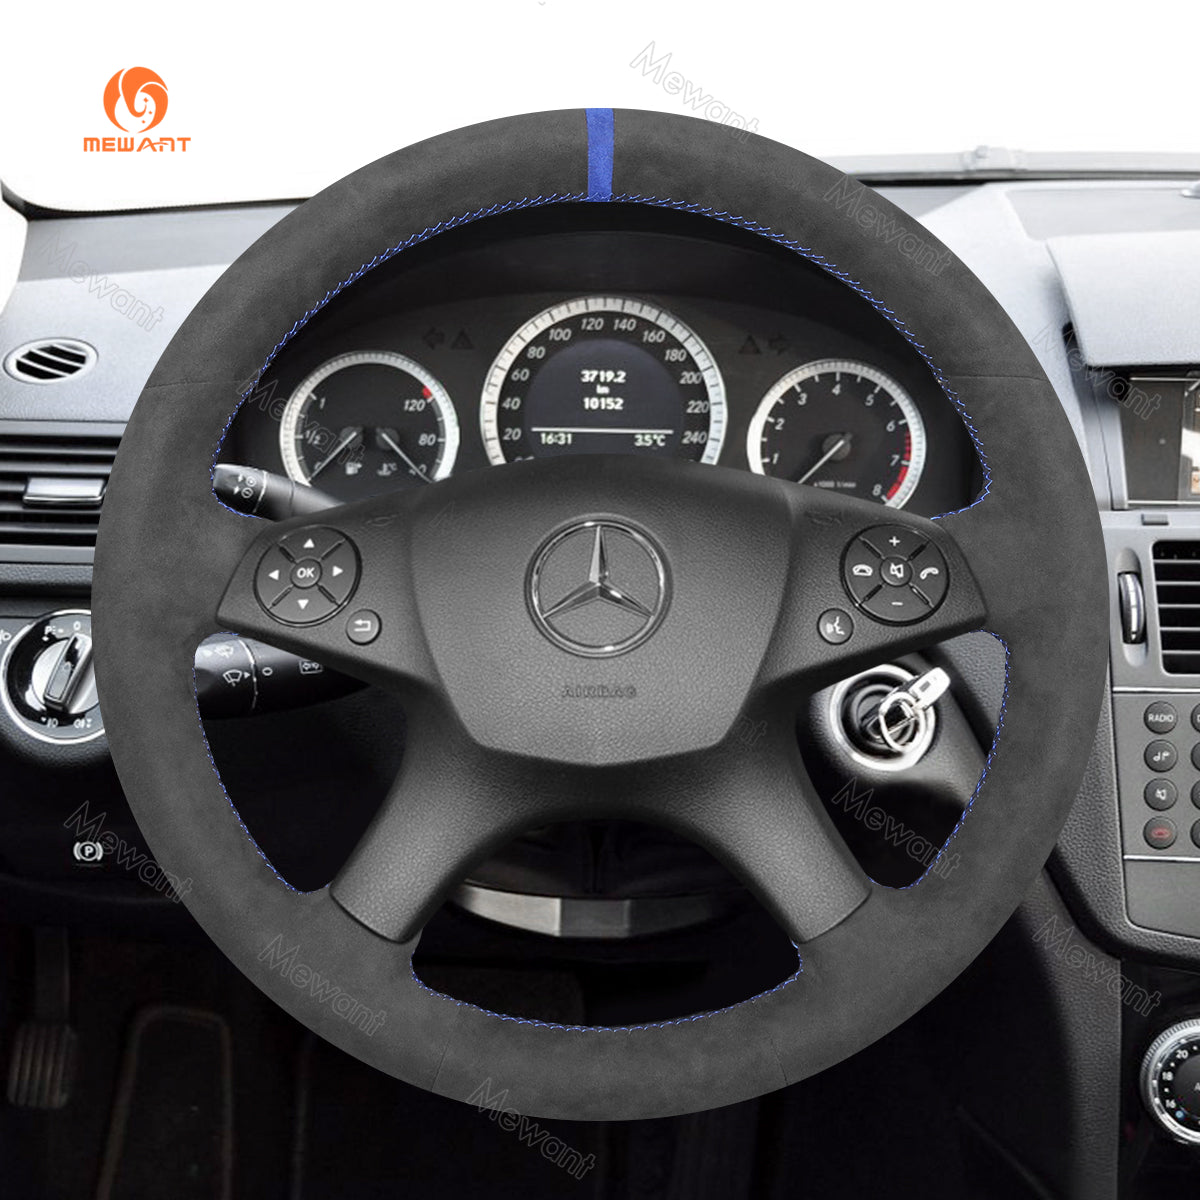 MEWANT Hand Stitch Dark Grey Alcantara Black Suede Car Steering Wheel Cover for Mercedes Benz C-Class W204 2007-2011